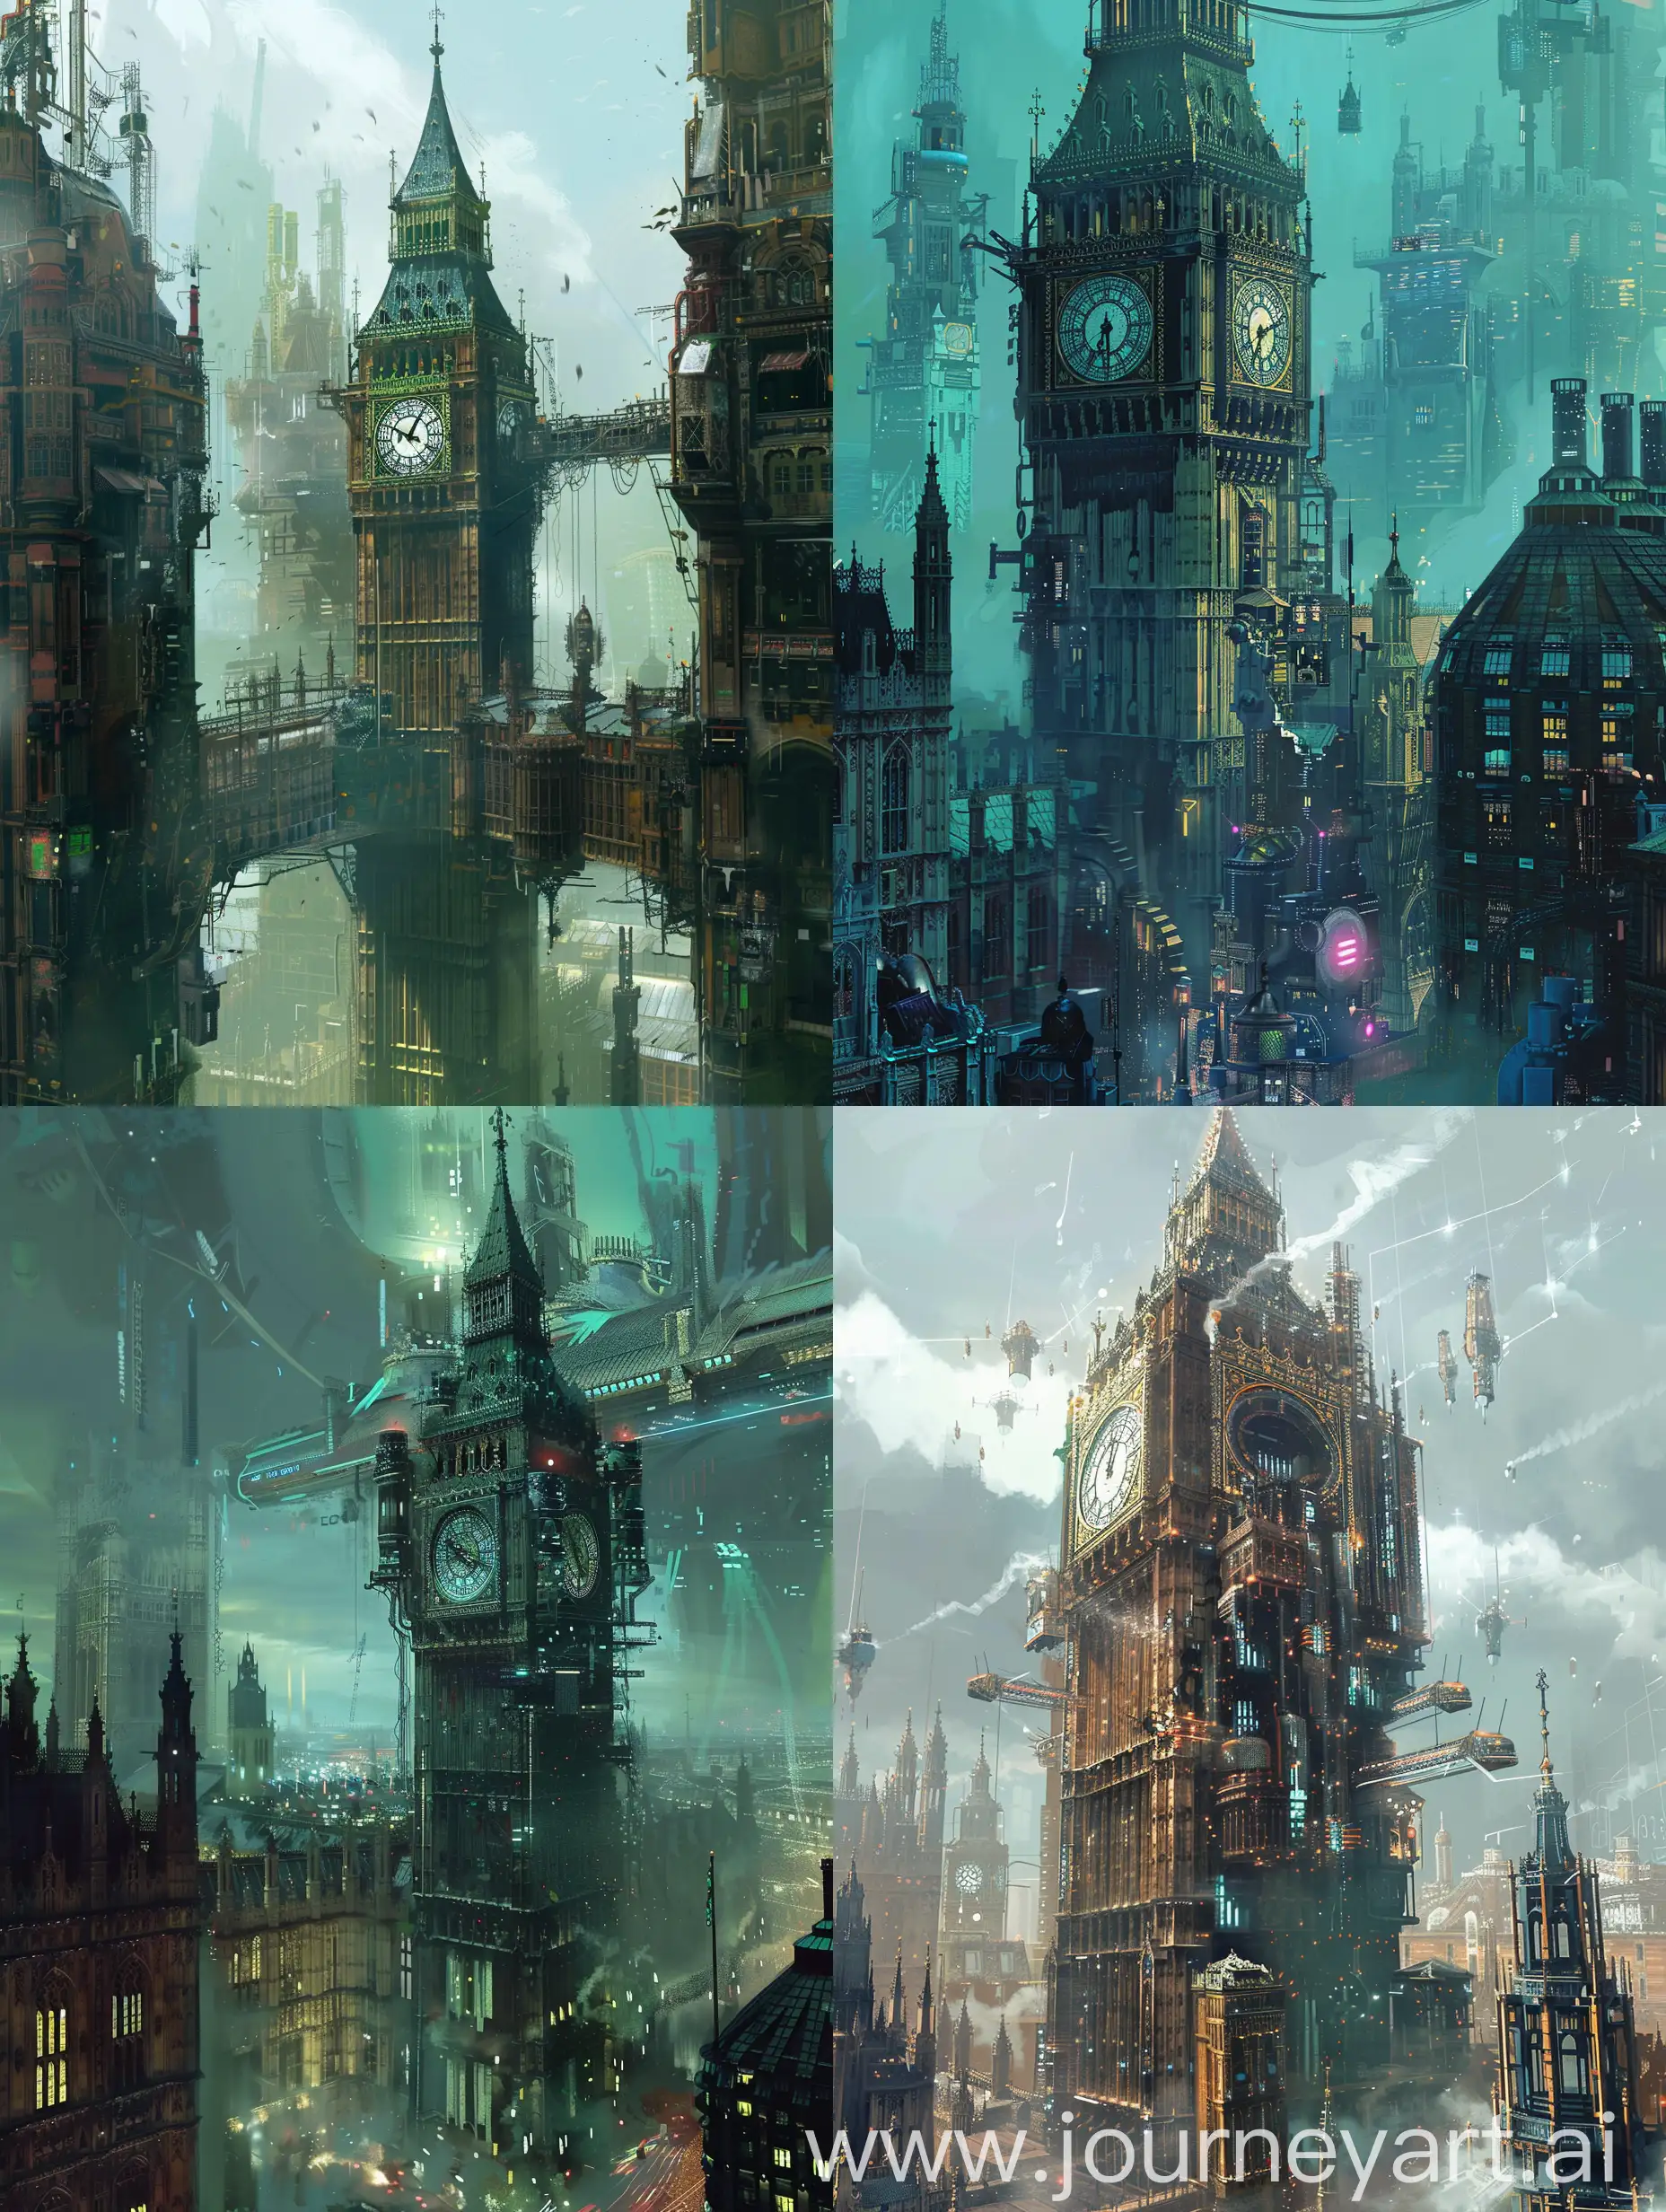 Cyberpunk-Palace-Big-Ben-Art-Futuristic-Cityscape-with-Iconic-Landmark